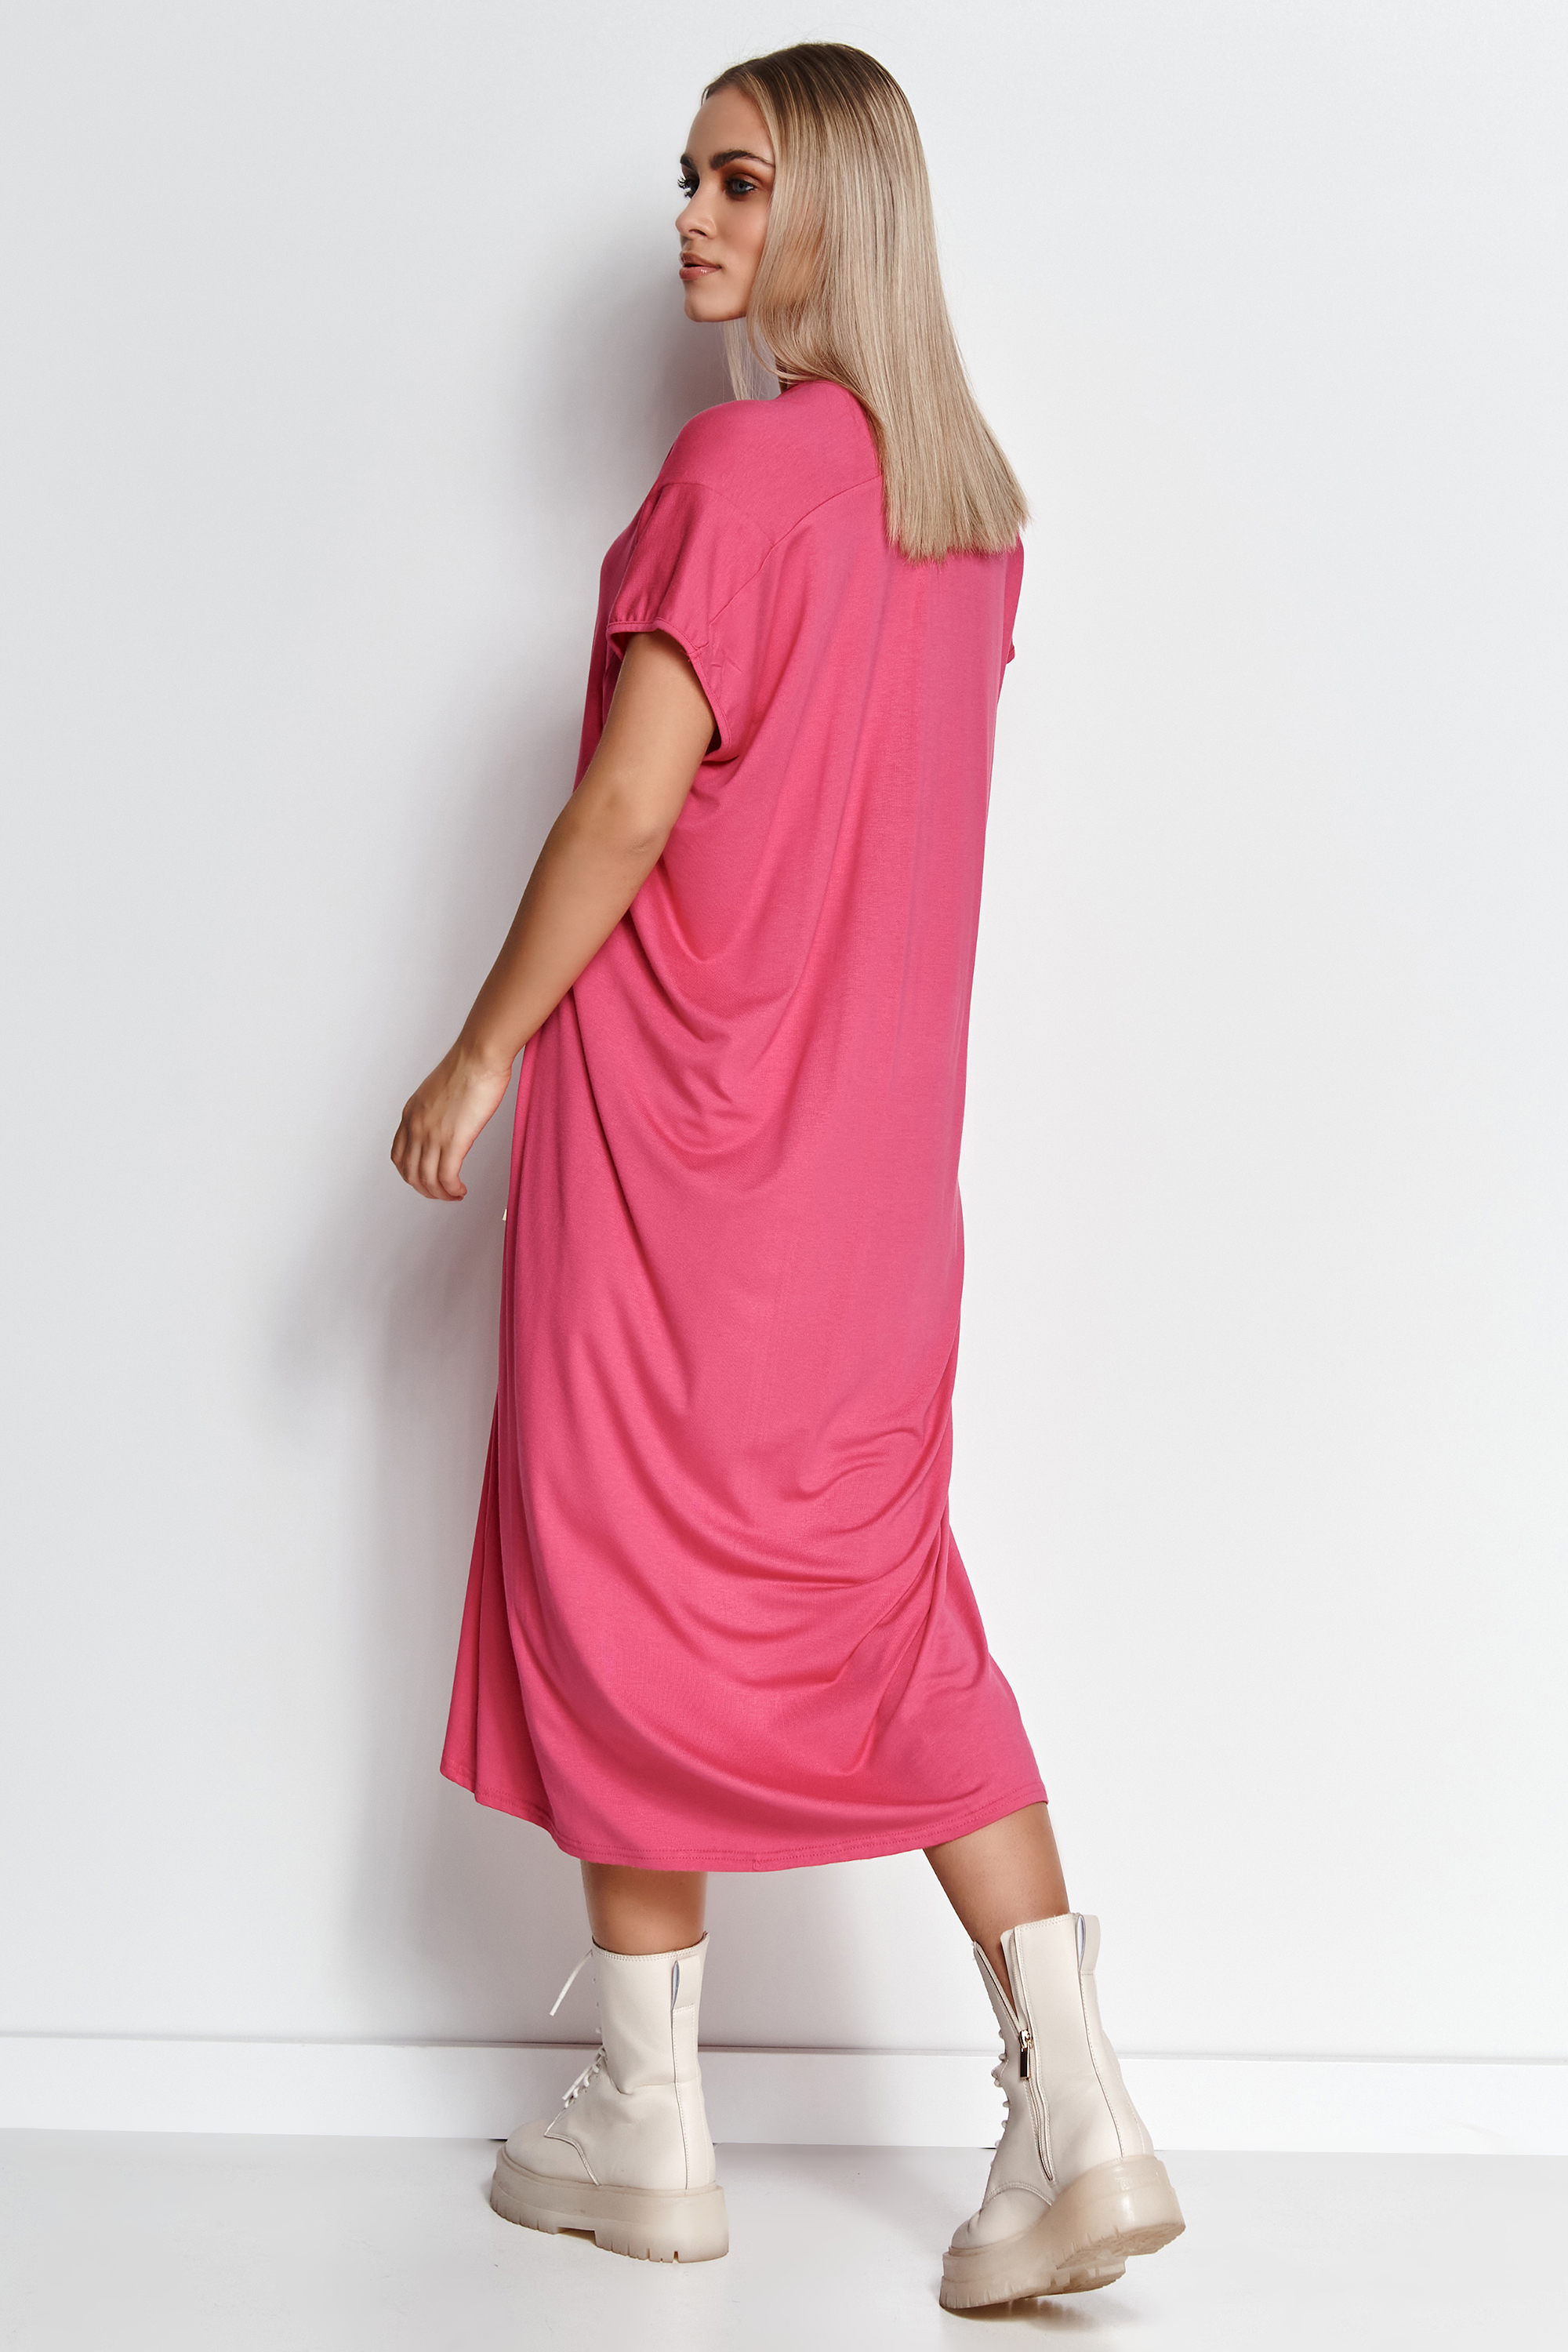 Pinkes T-Shirt Kleid in Maxilänge mit Kordelgürtel